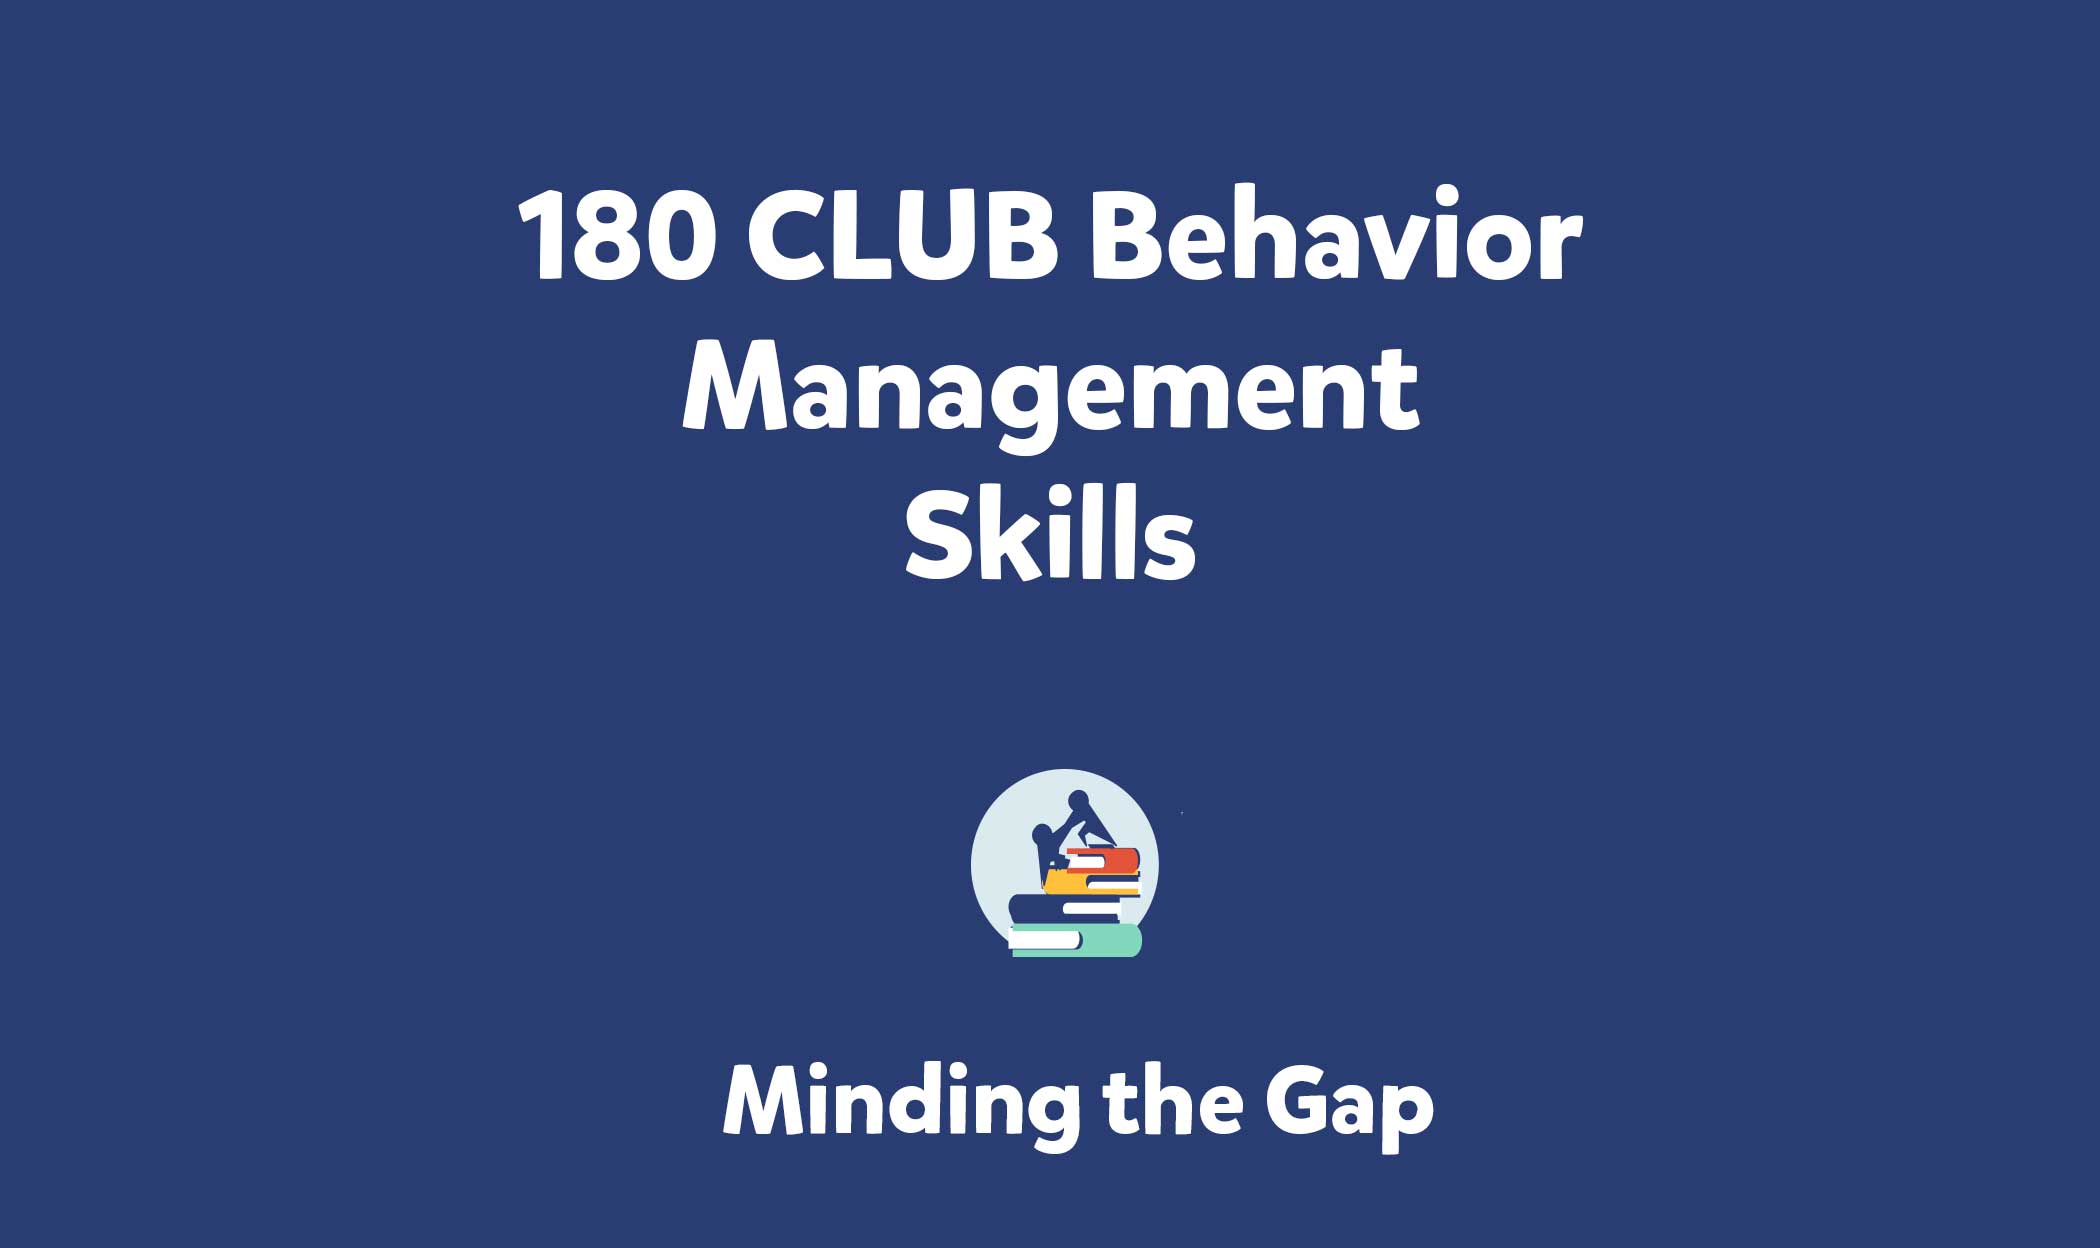 180 CLUB Behavior Management Skills